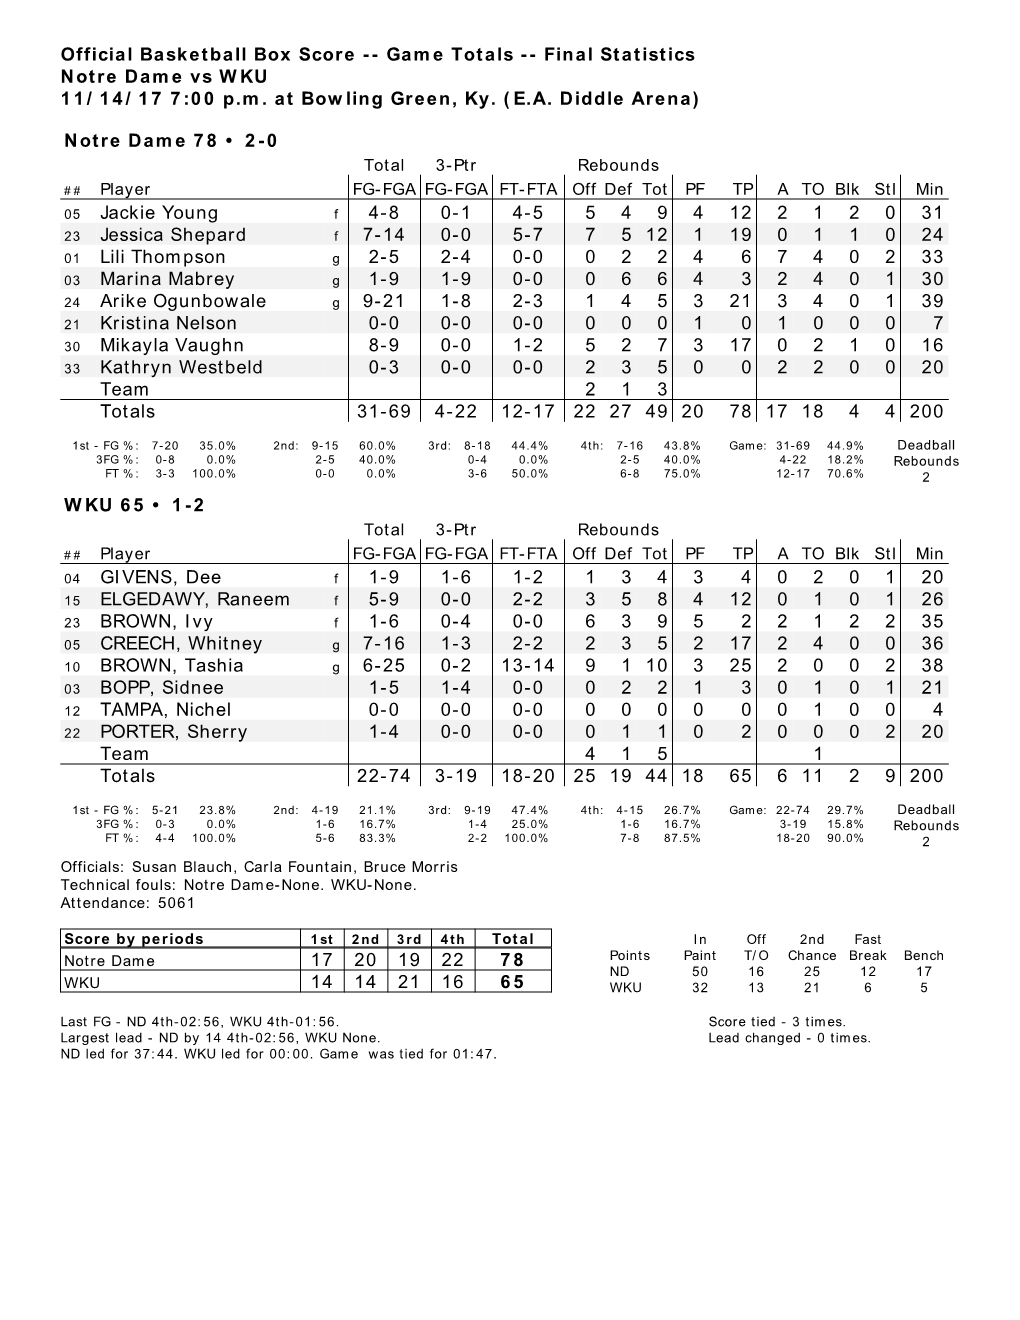 Official Basketball Box Score -- Game Totals -- Final Statistics Notre Dame Vs WKU 11/ 14/ 17 7:00 P.M